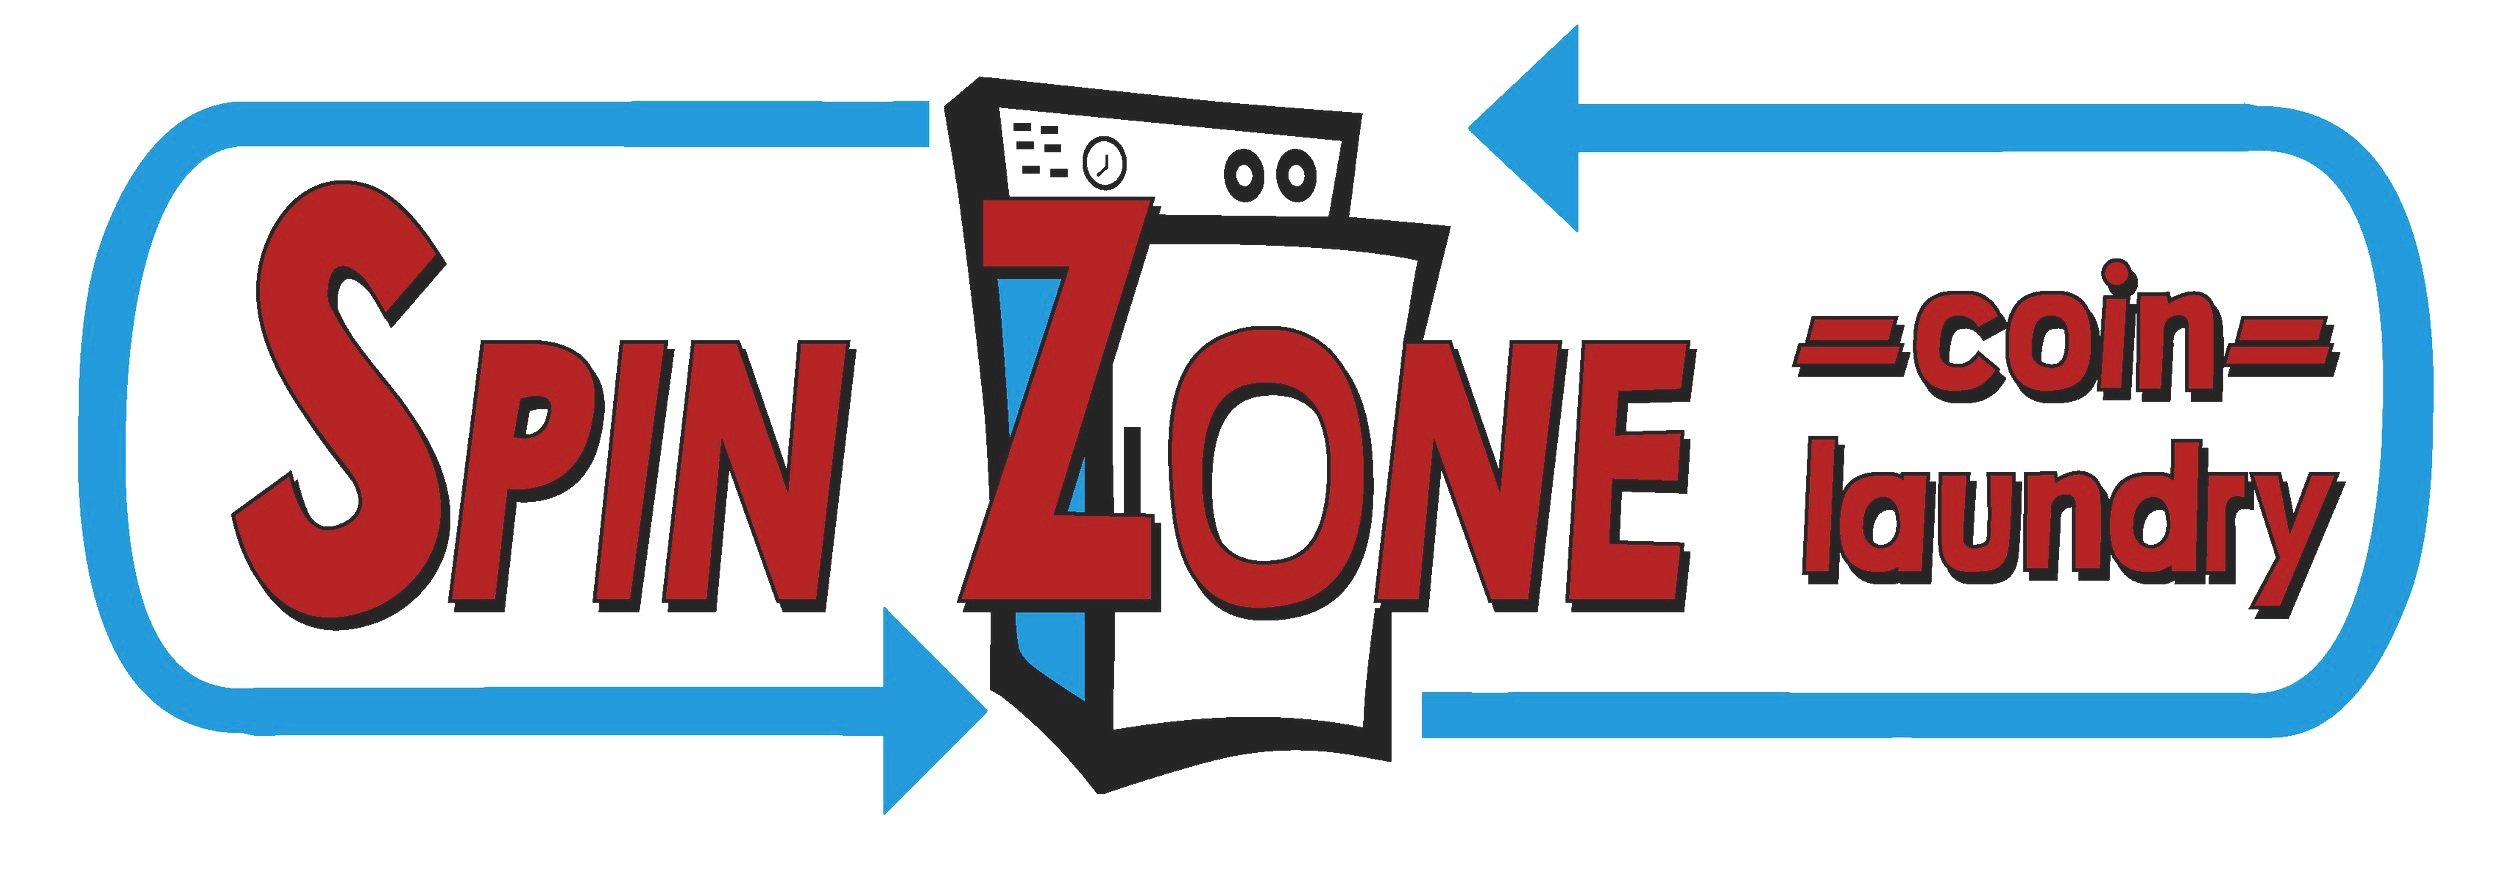 Spin Zone Logo Jpg.jpg